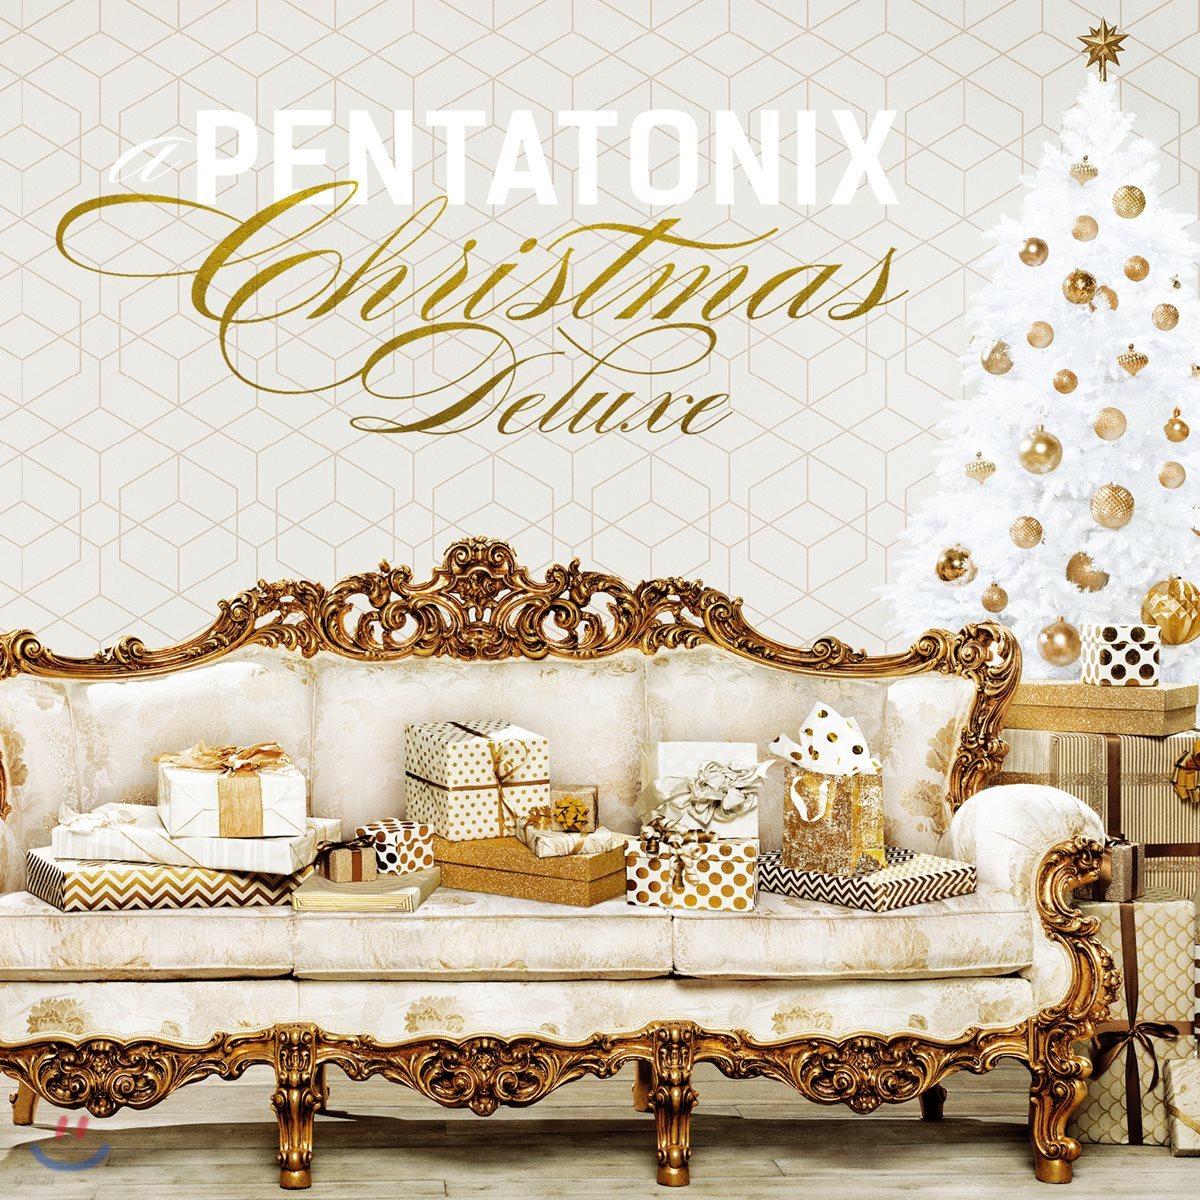 Pentatonix - A Pentatonix Christmas (Deluxe Edition) 펜타토닉스 크리스마스 앨범